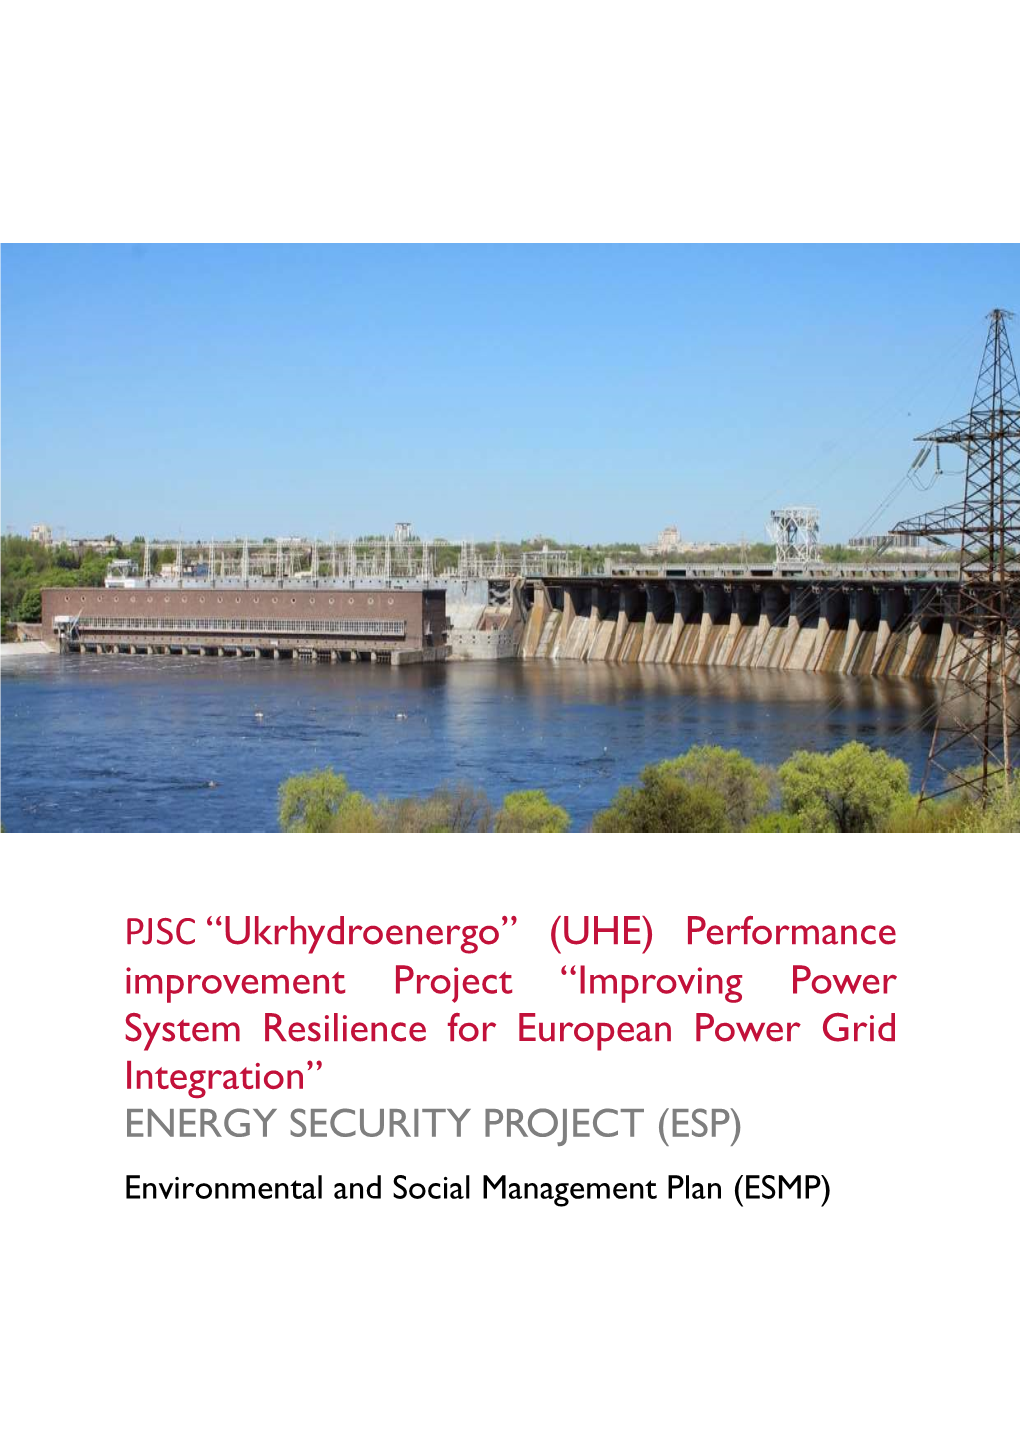 PJSC “Ukrhydroenergo” (UHE) Performance Improvement Project